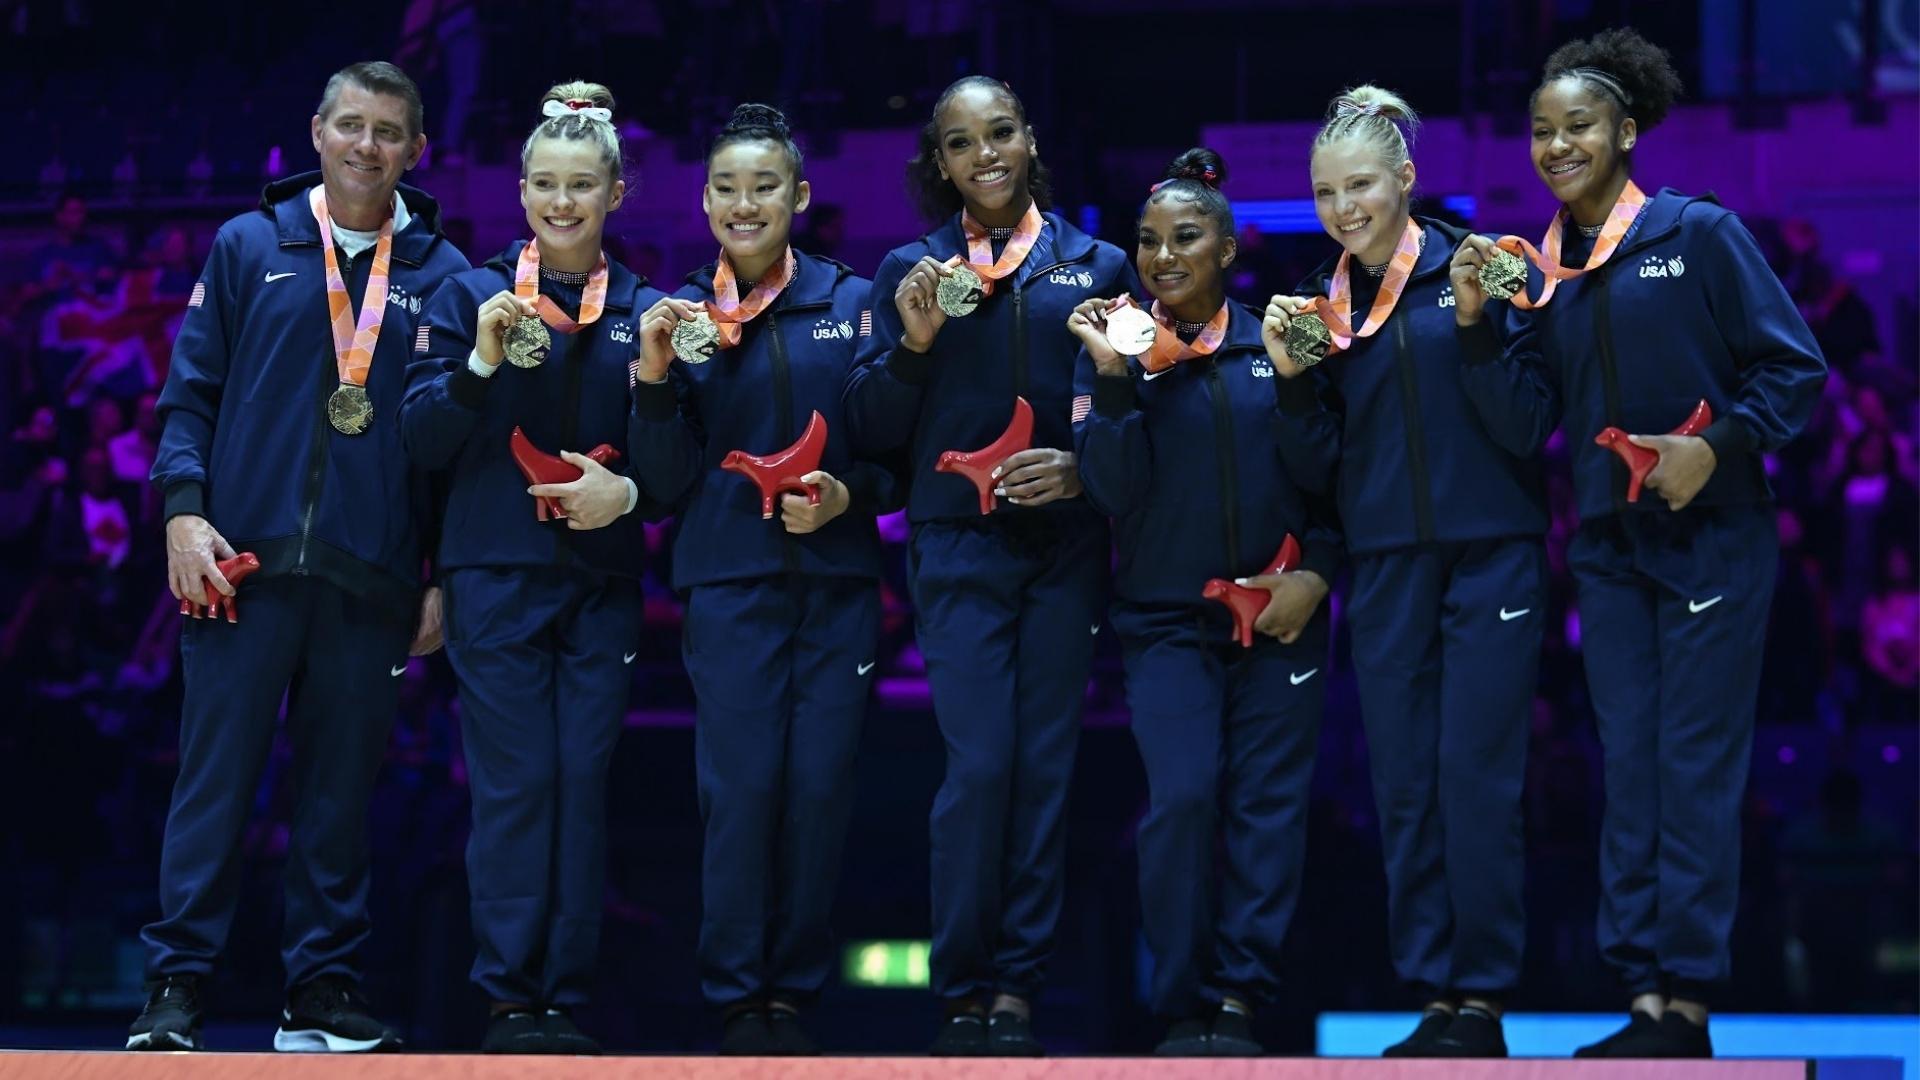 2022 World Gymnastics Championships U.S. women win historic sixth